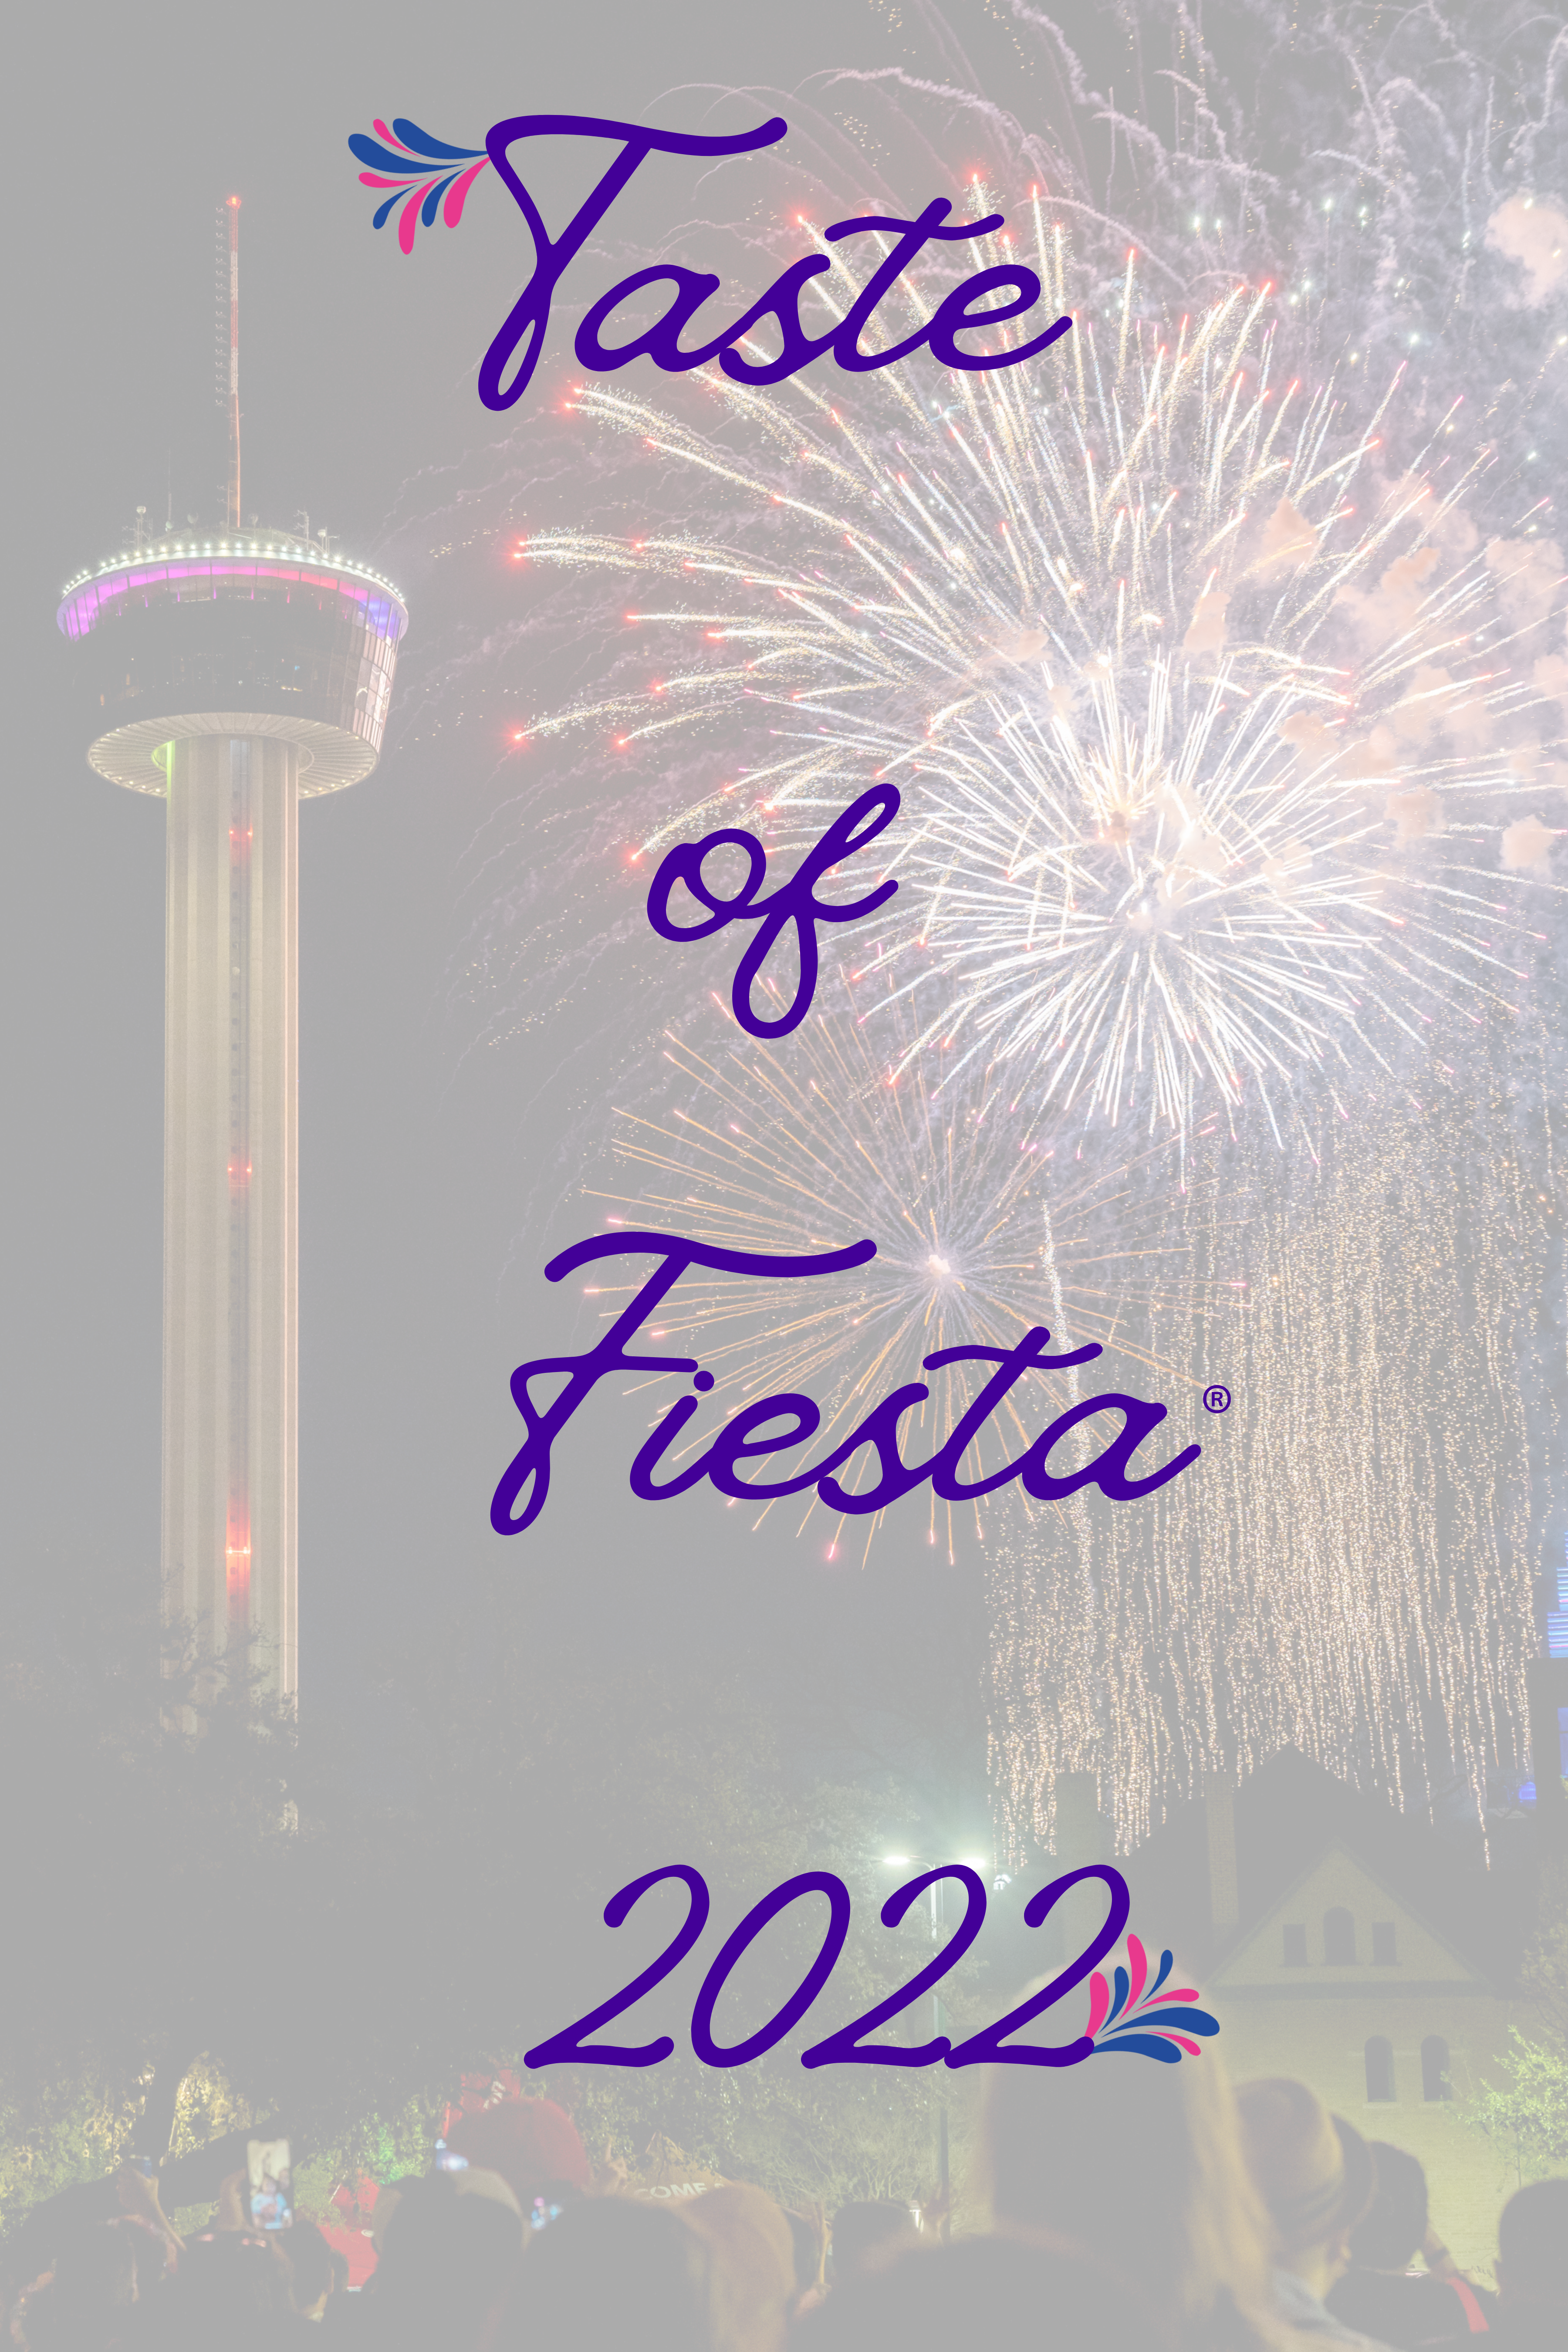 Taste of Fiesta and NFT Release 2022